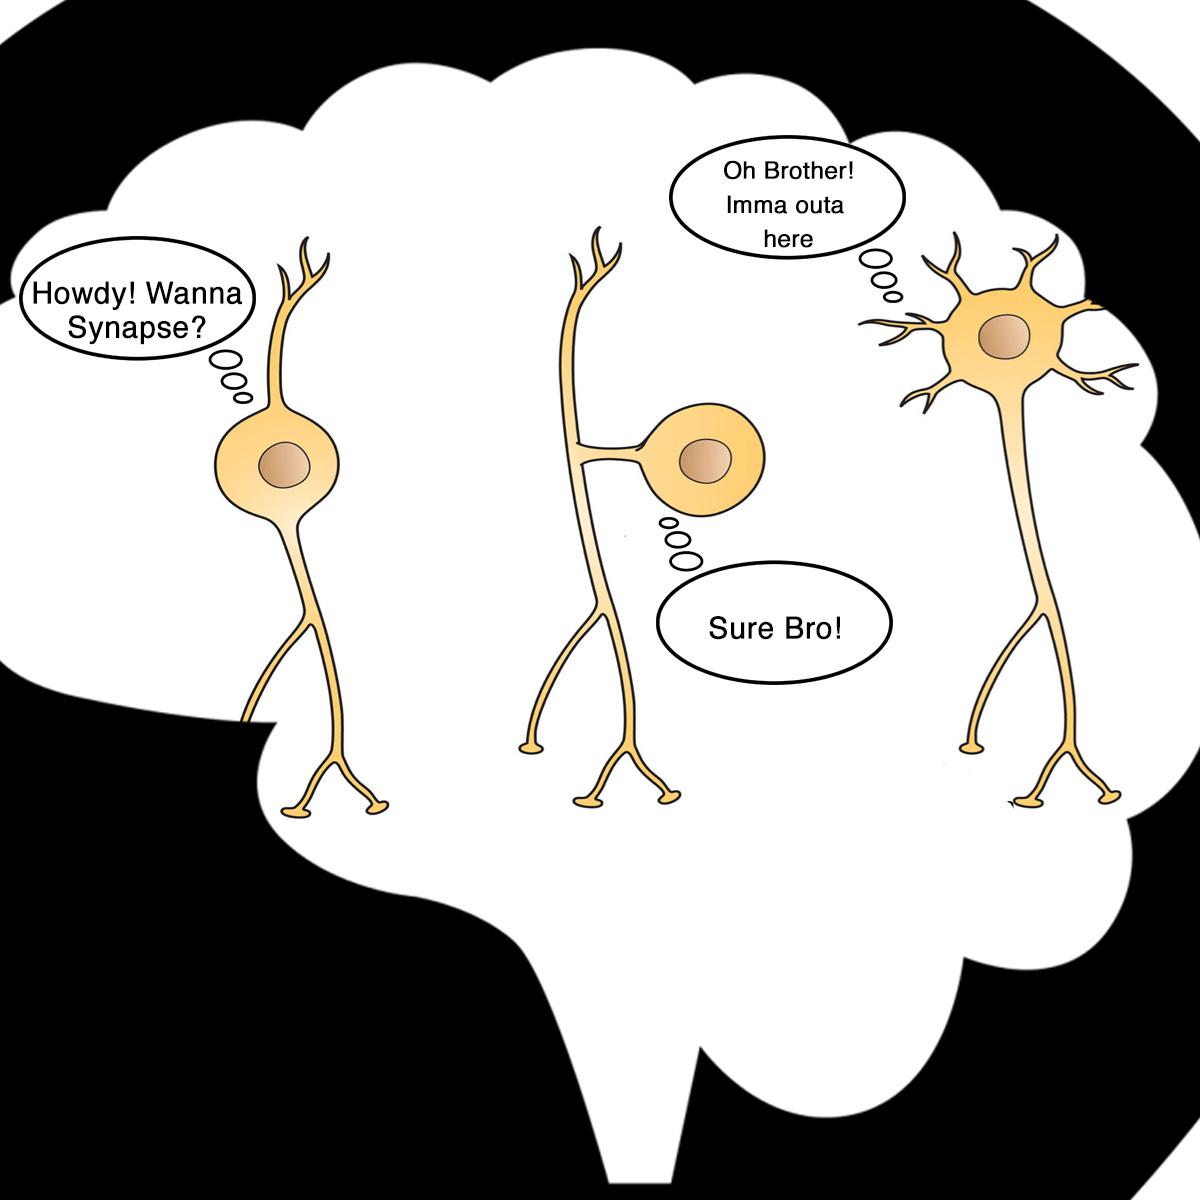 Random Communications by neurons